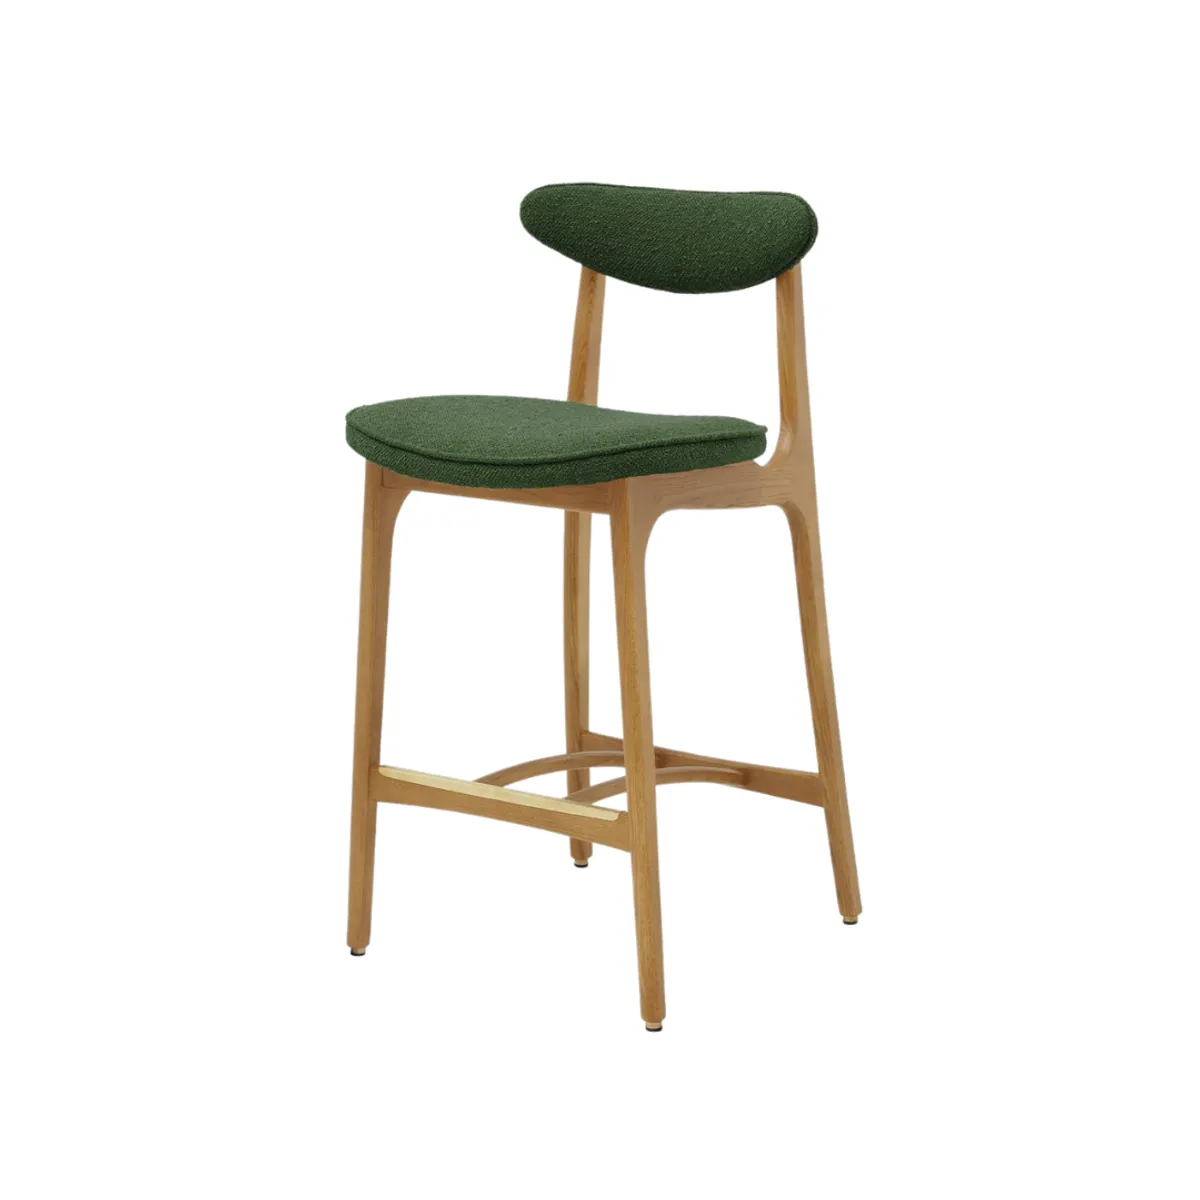 200-190 bar stool 2